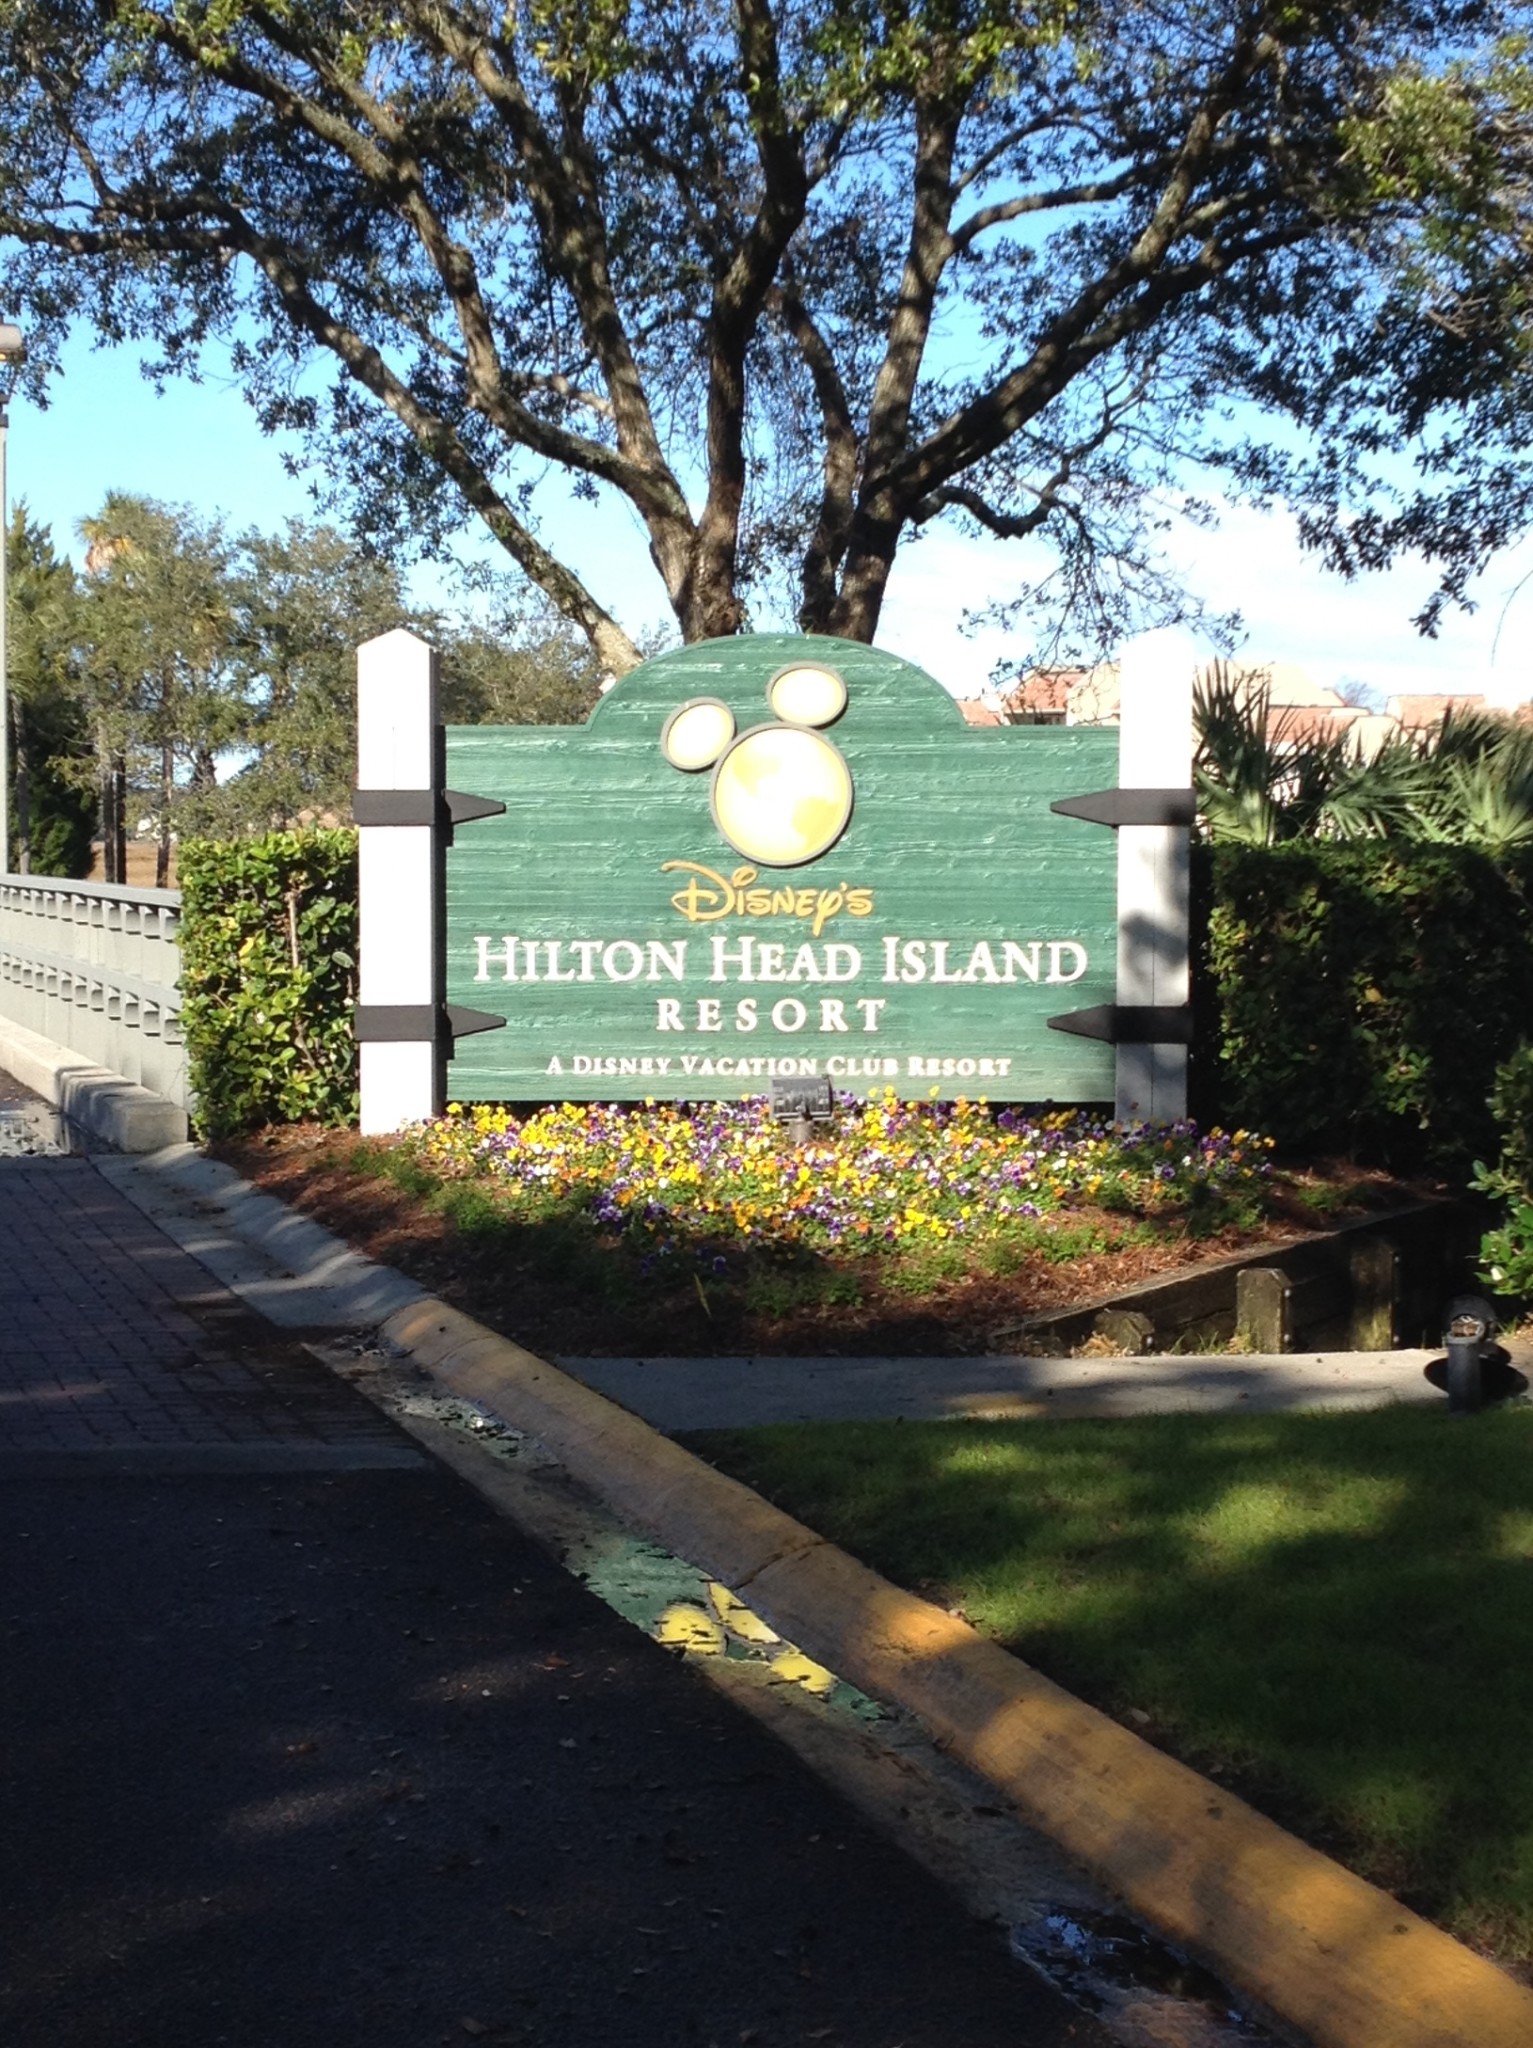 Take a trip to Disney’s Hilton Head Island Resort